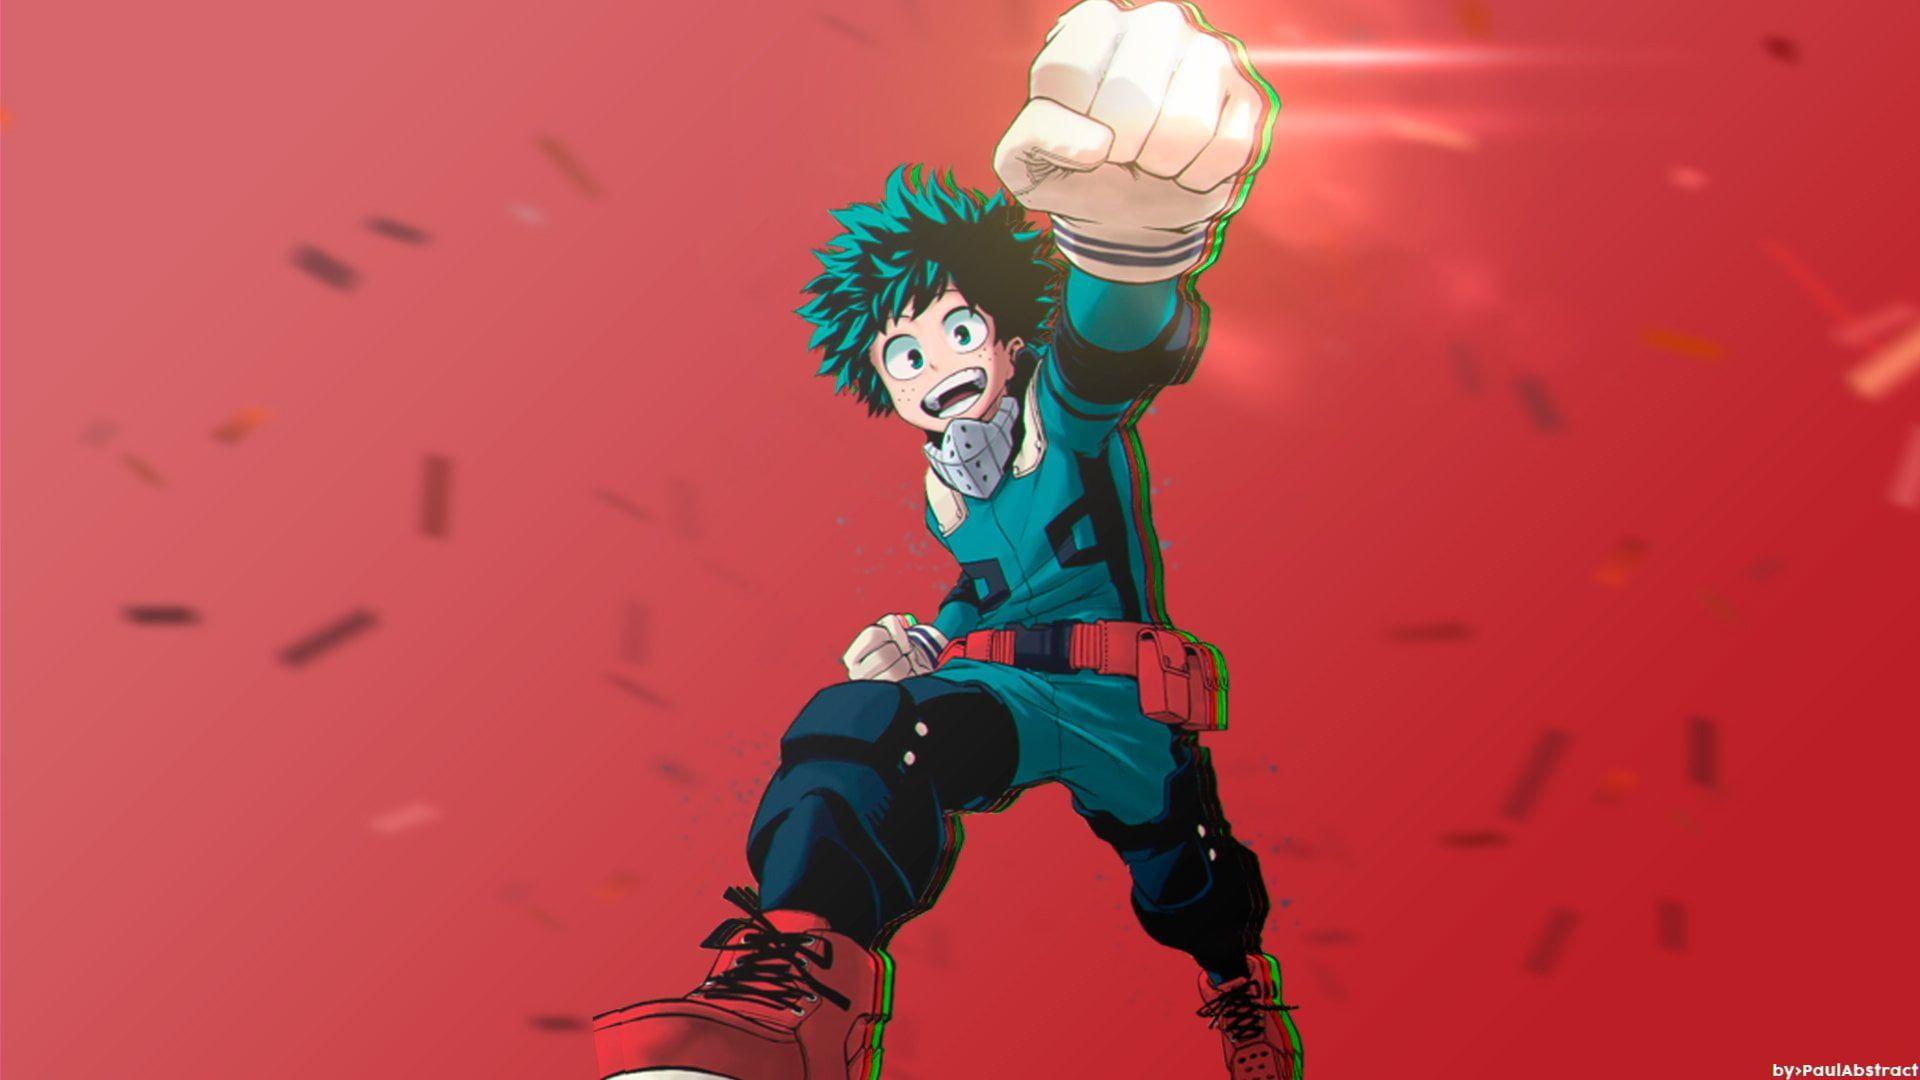 Green Haired Anime Character Wallpaper #Anime My Hero Academia